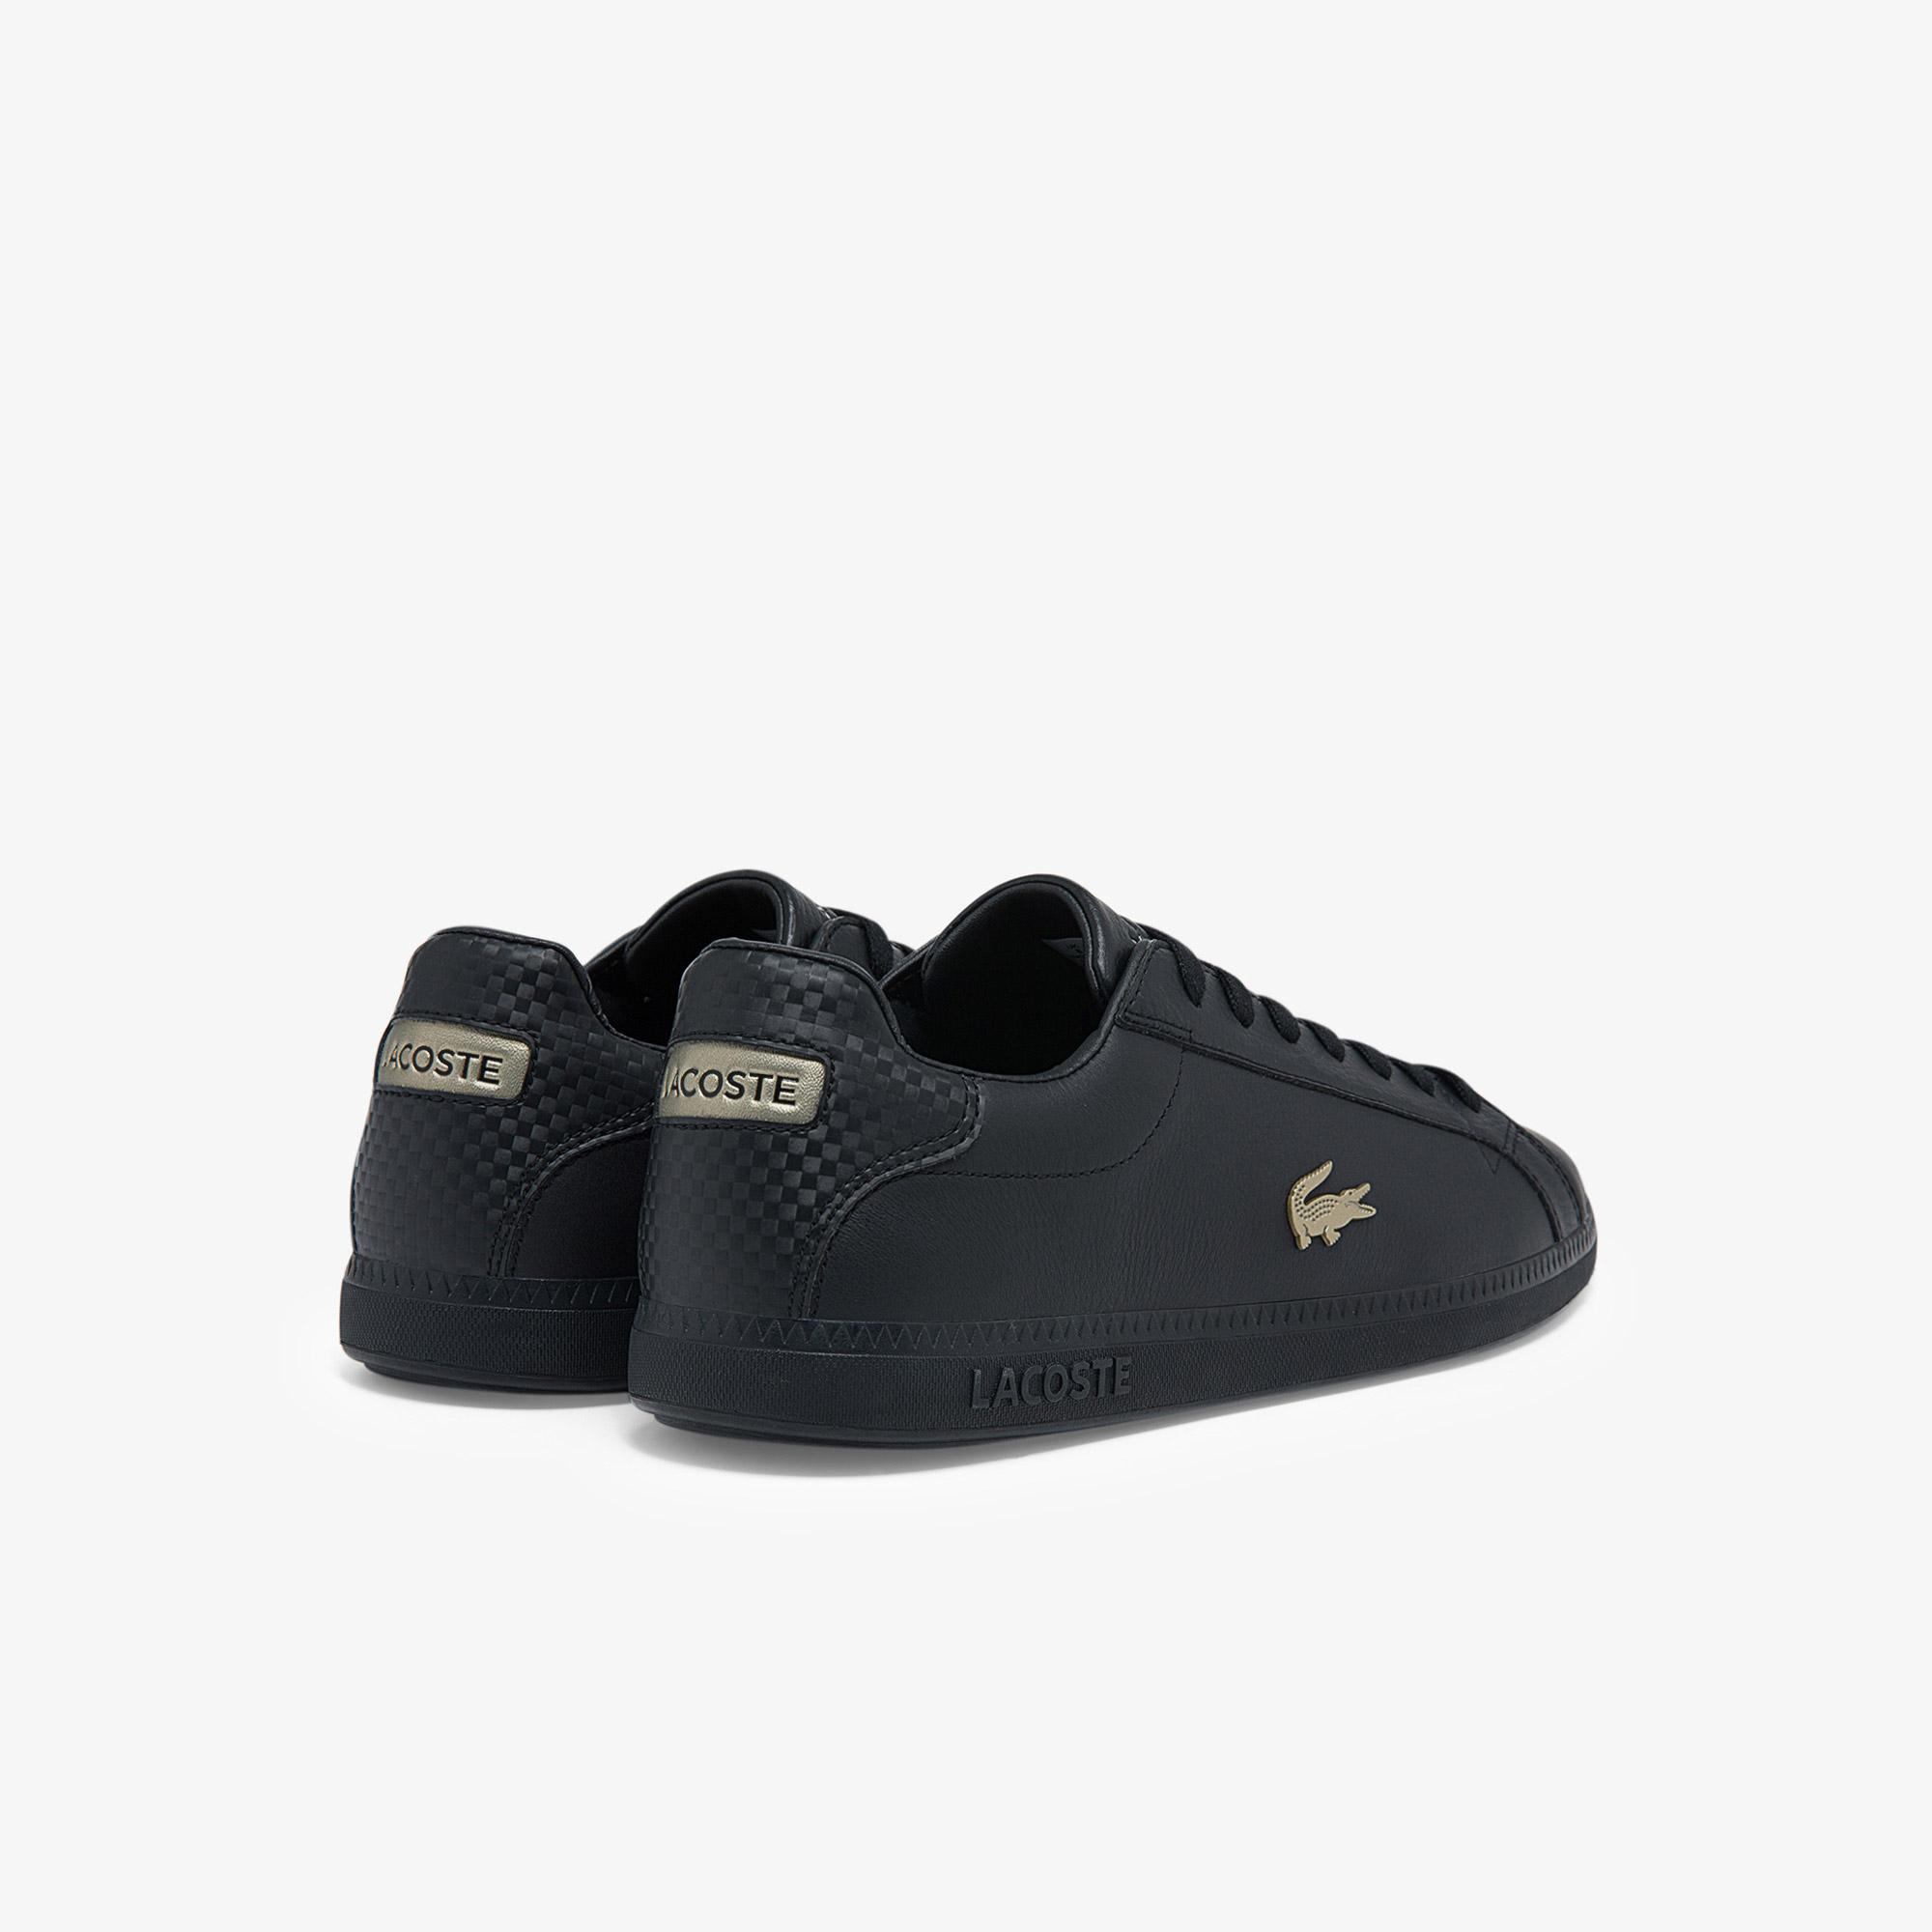 Lacoste Men's Graduate Sneakers